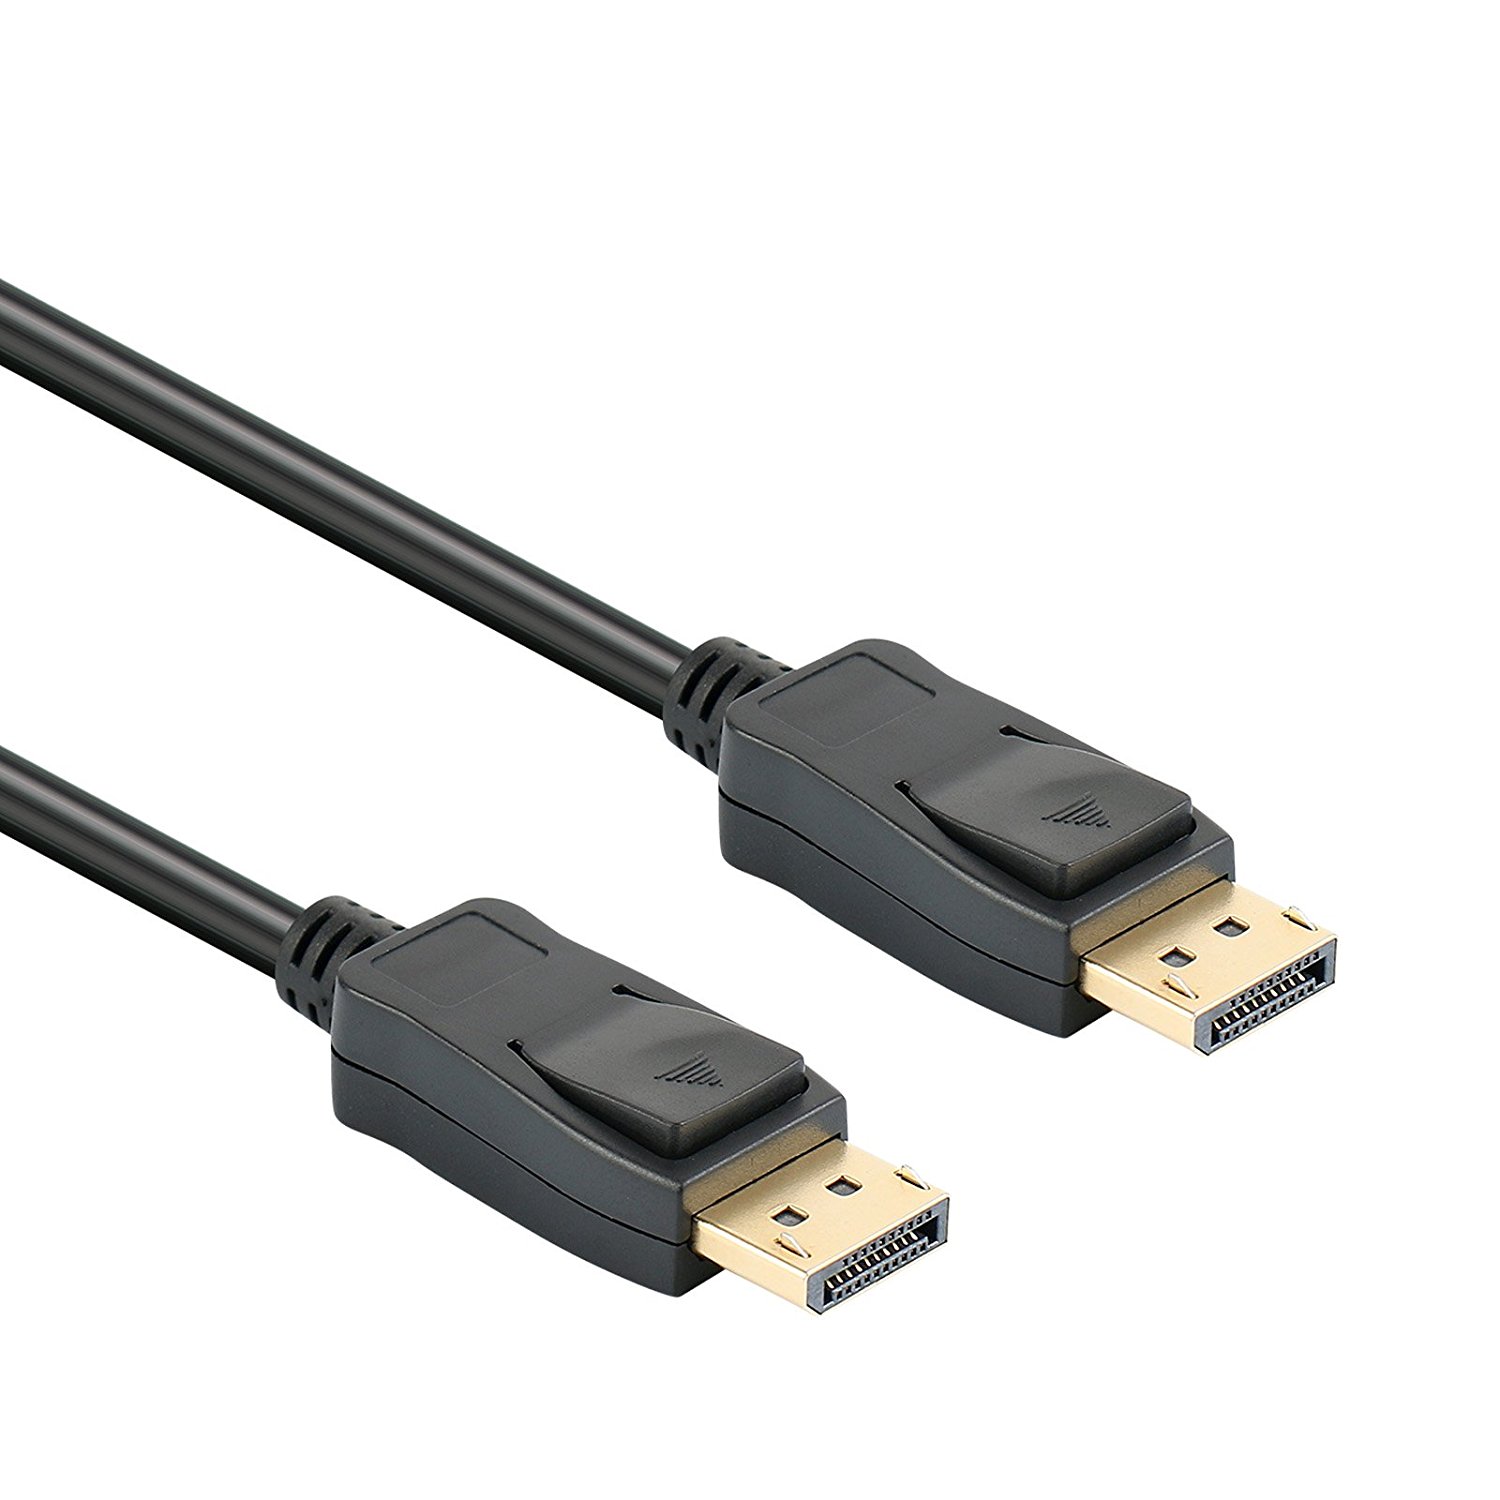 DisplayPort to DP 4K 60Hz 6 Feet Cable, Benfei DisplayPort to Display Port Male to Male Cable